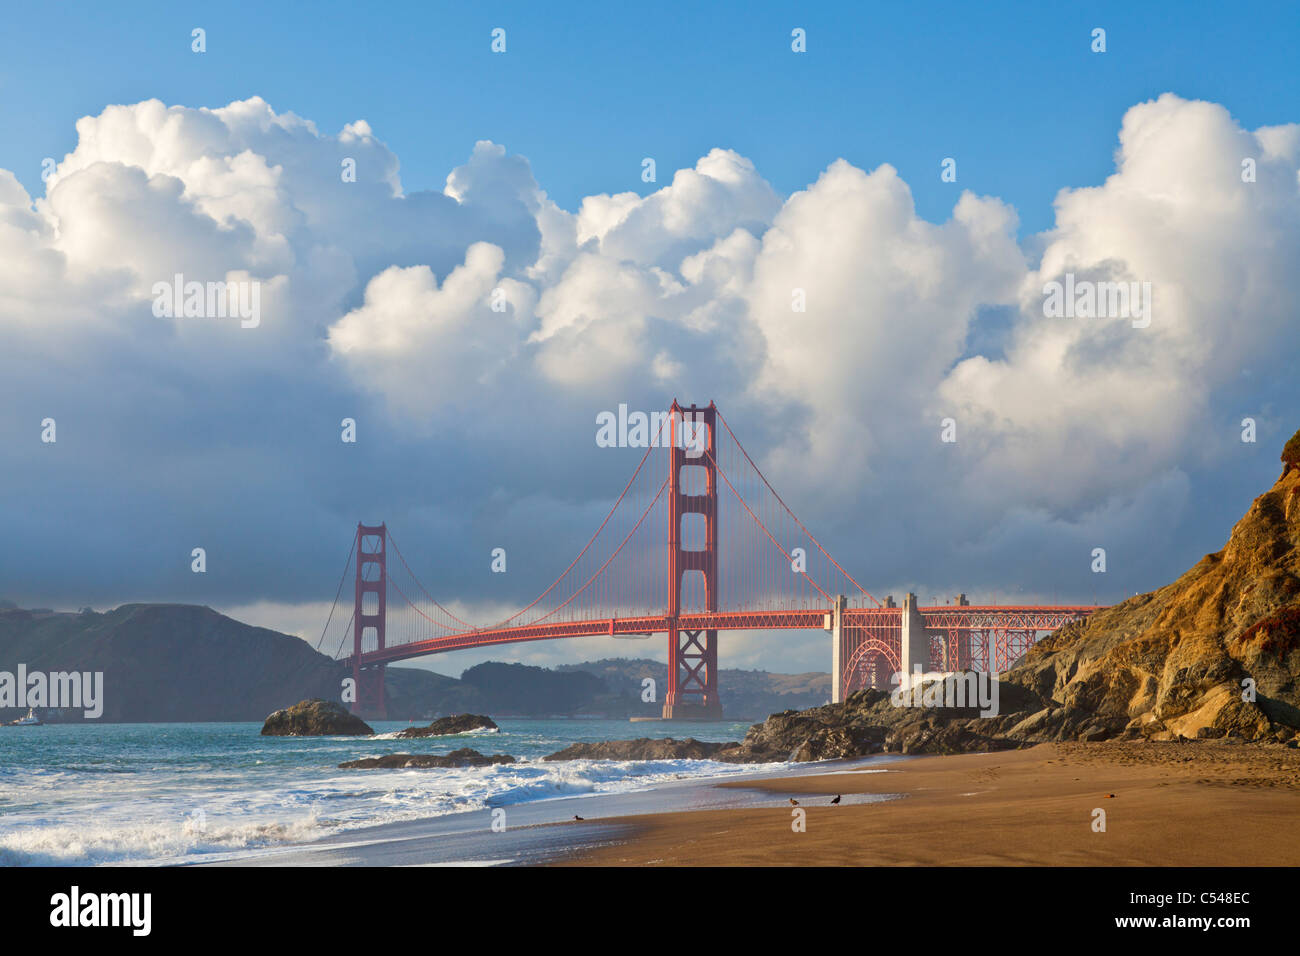 San Francisco The Golden Gate Bridge linking the city with Marin County from Baker beach City of San Francisco California USA Stock Photo